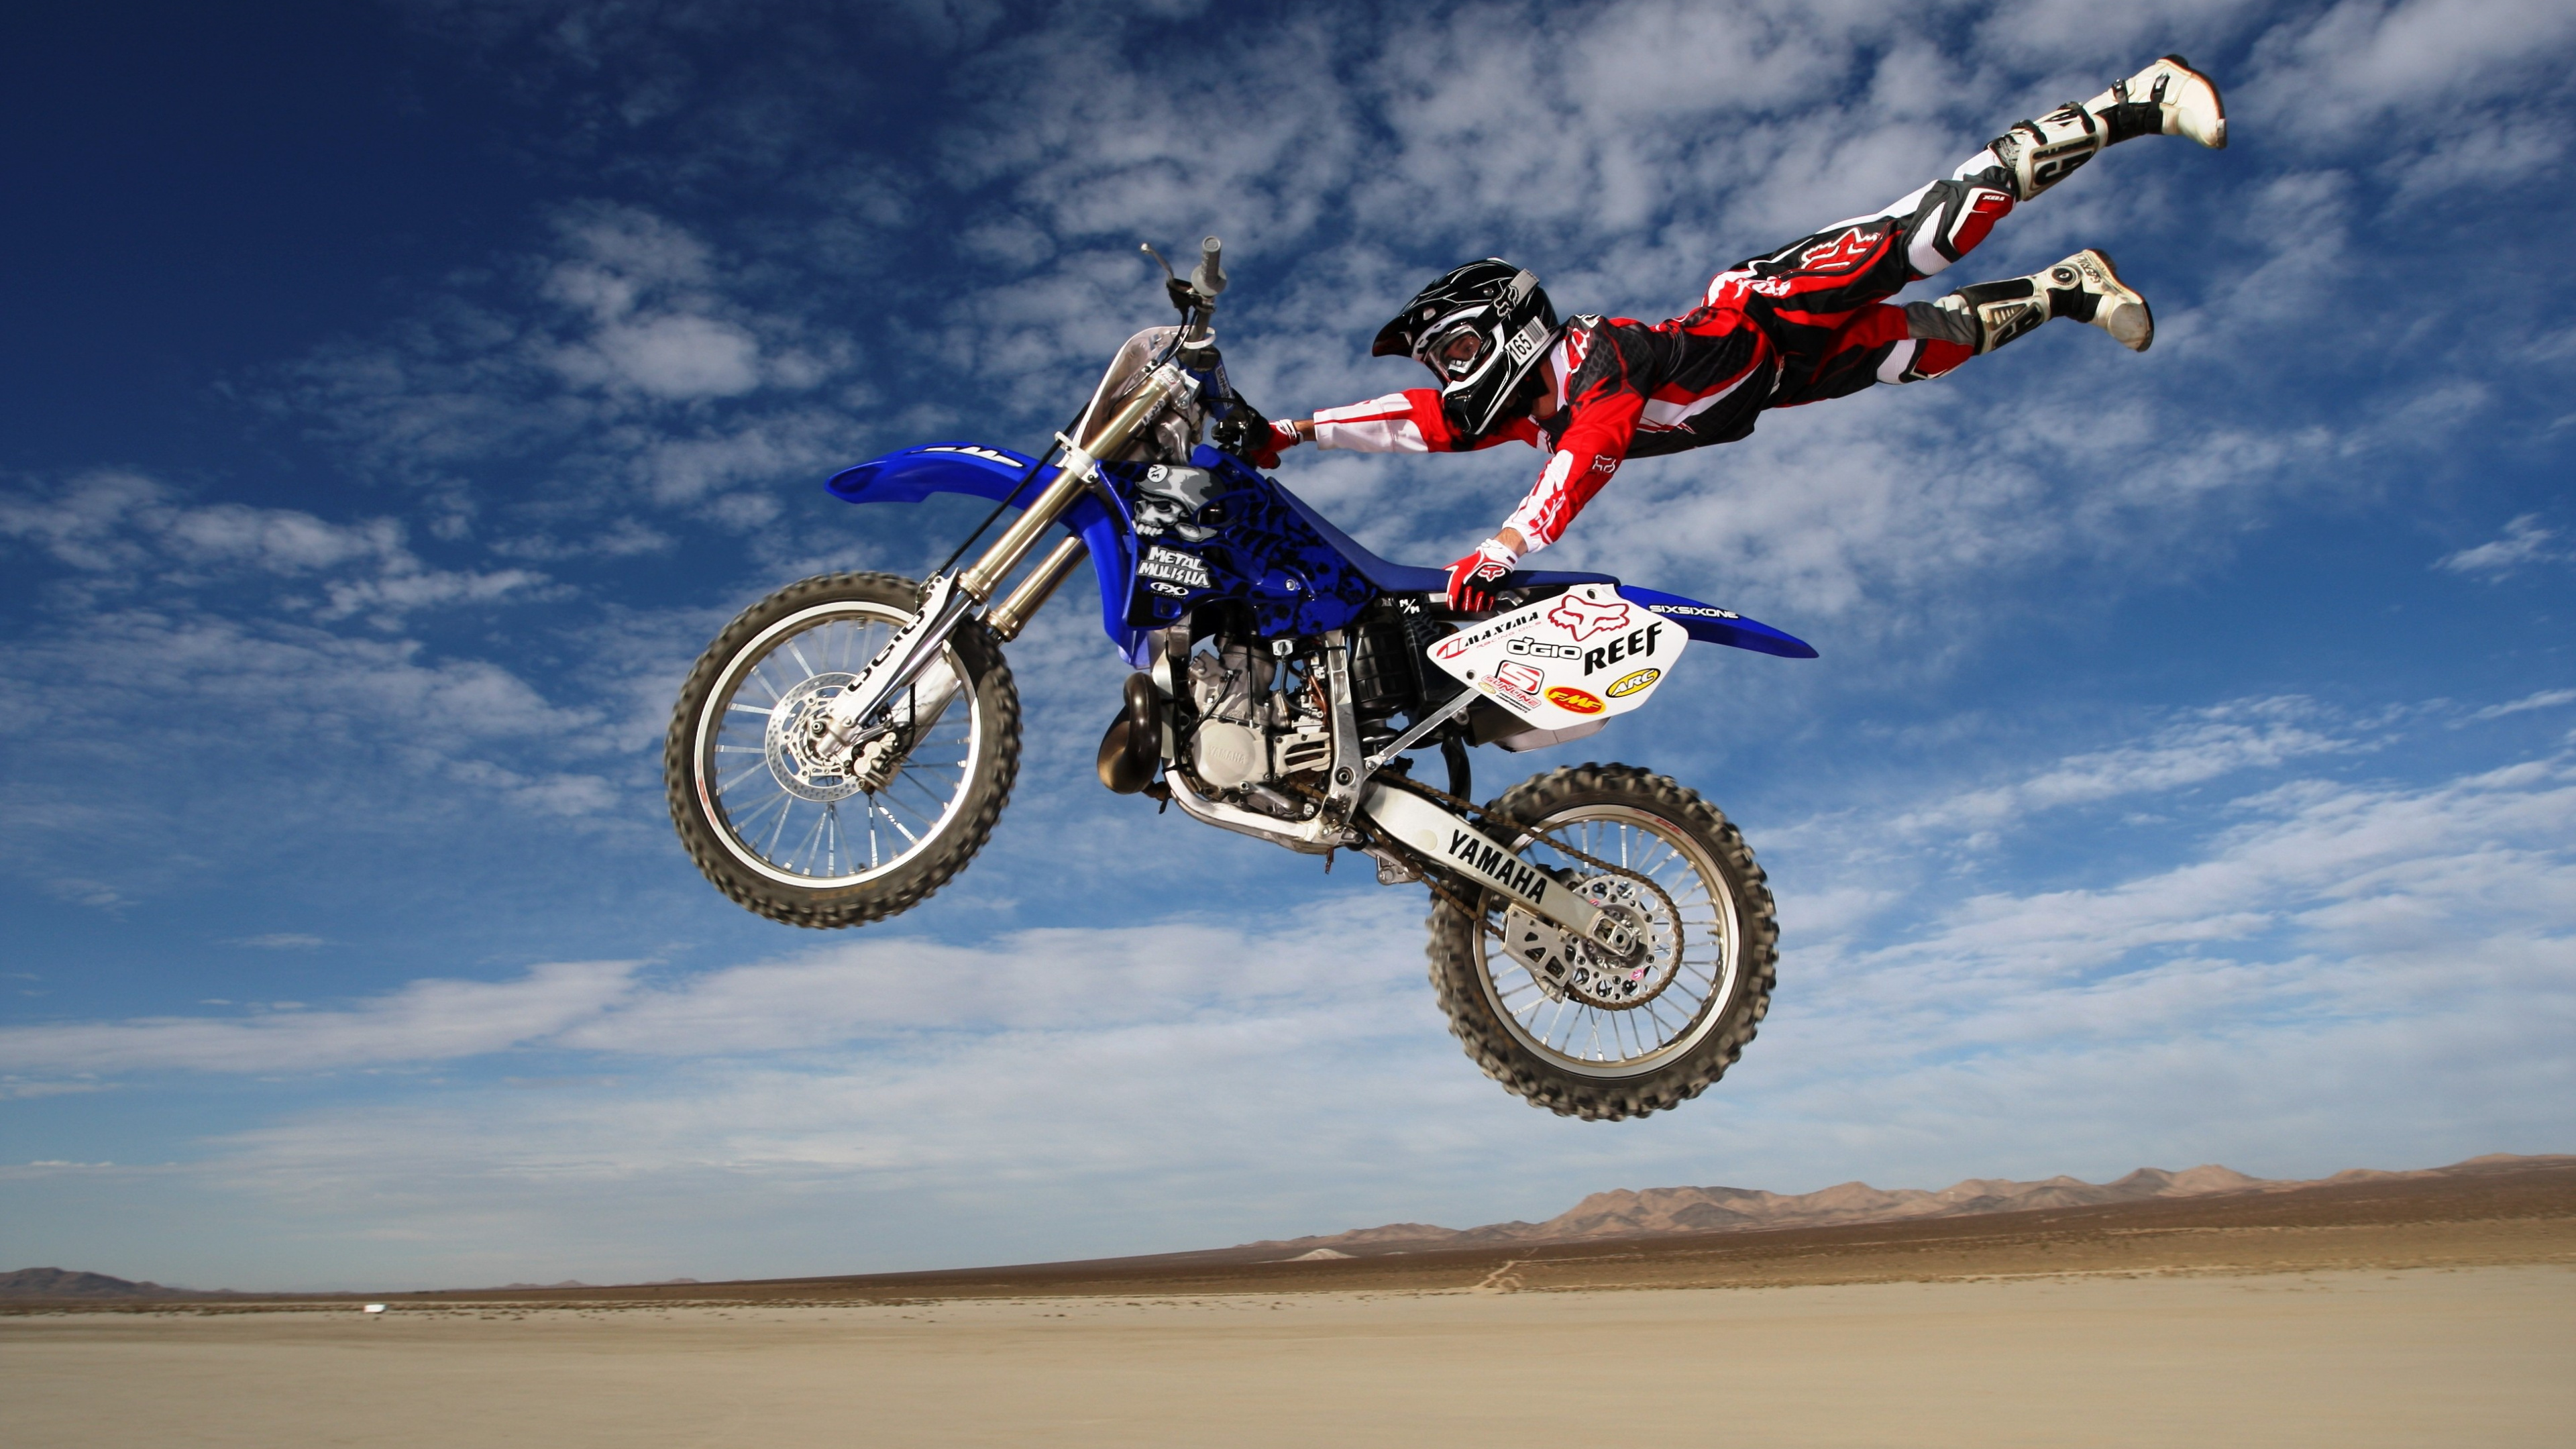 Stunt: Stuntman performing acrobatics in the air on his KTM dirt bike. 3840x2160 4K Wallpaper.